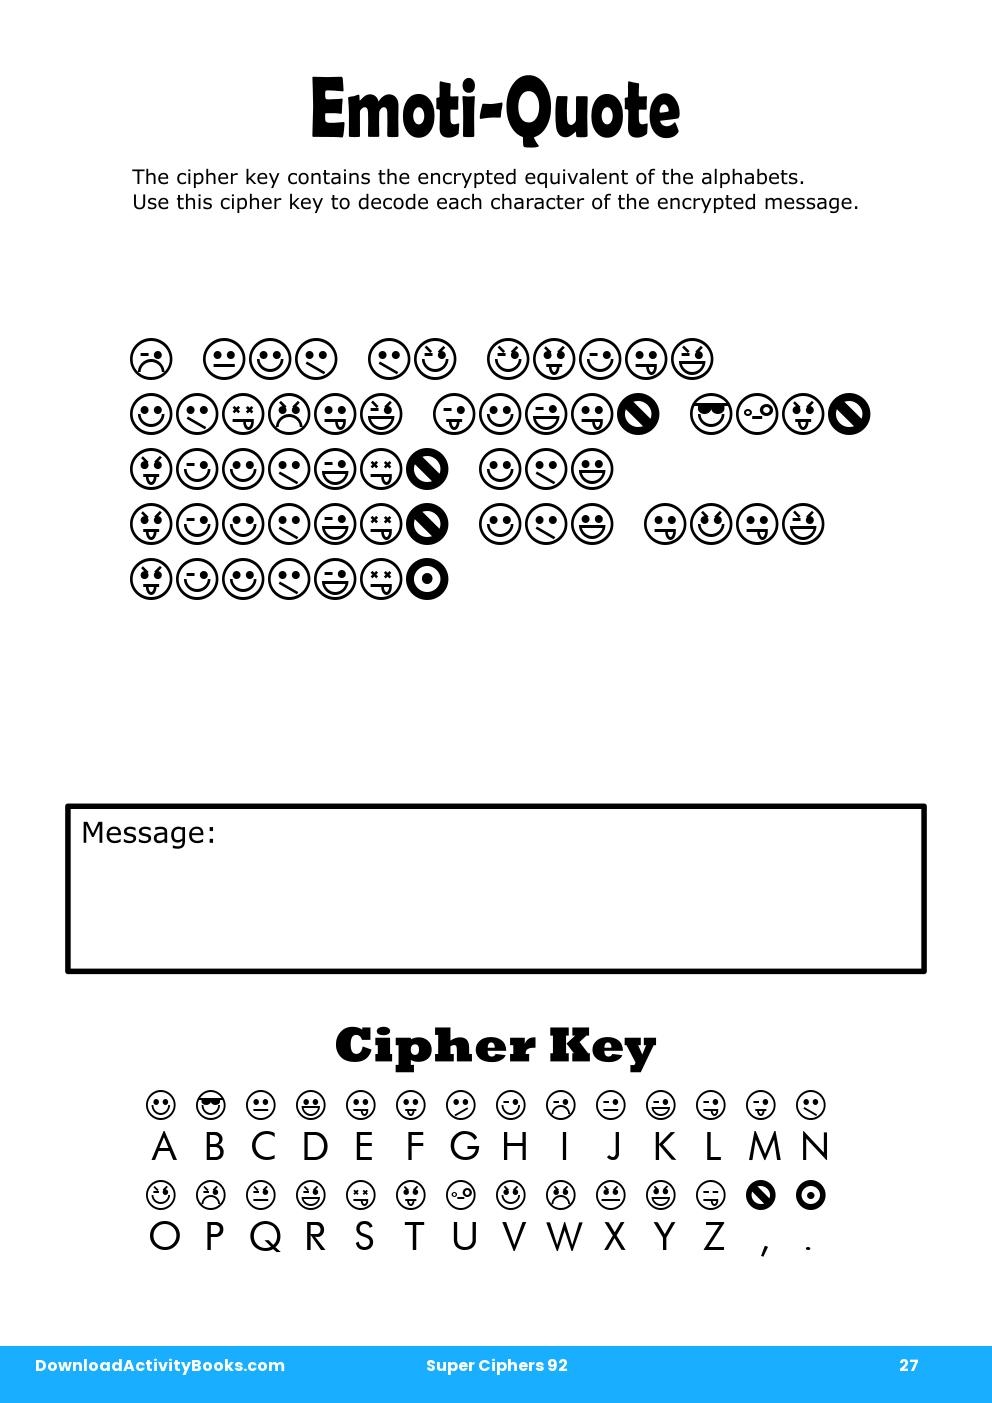 Emoti-Quote in Super Ciphers 92